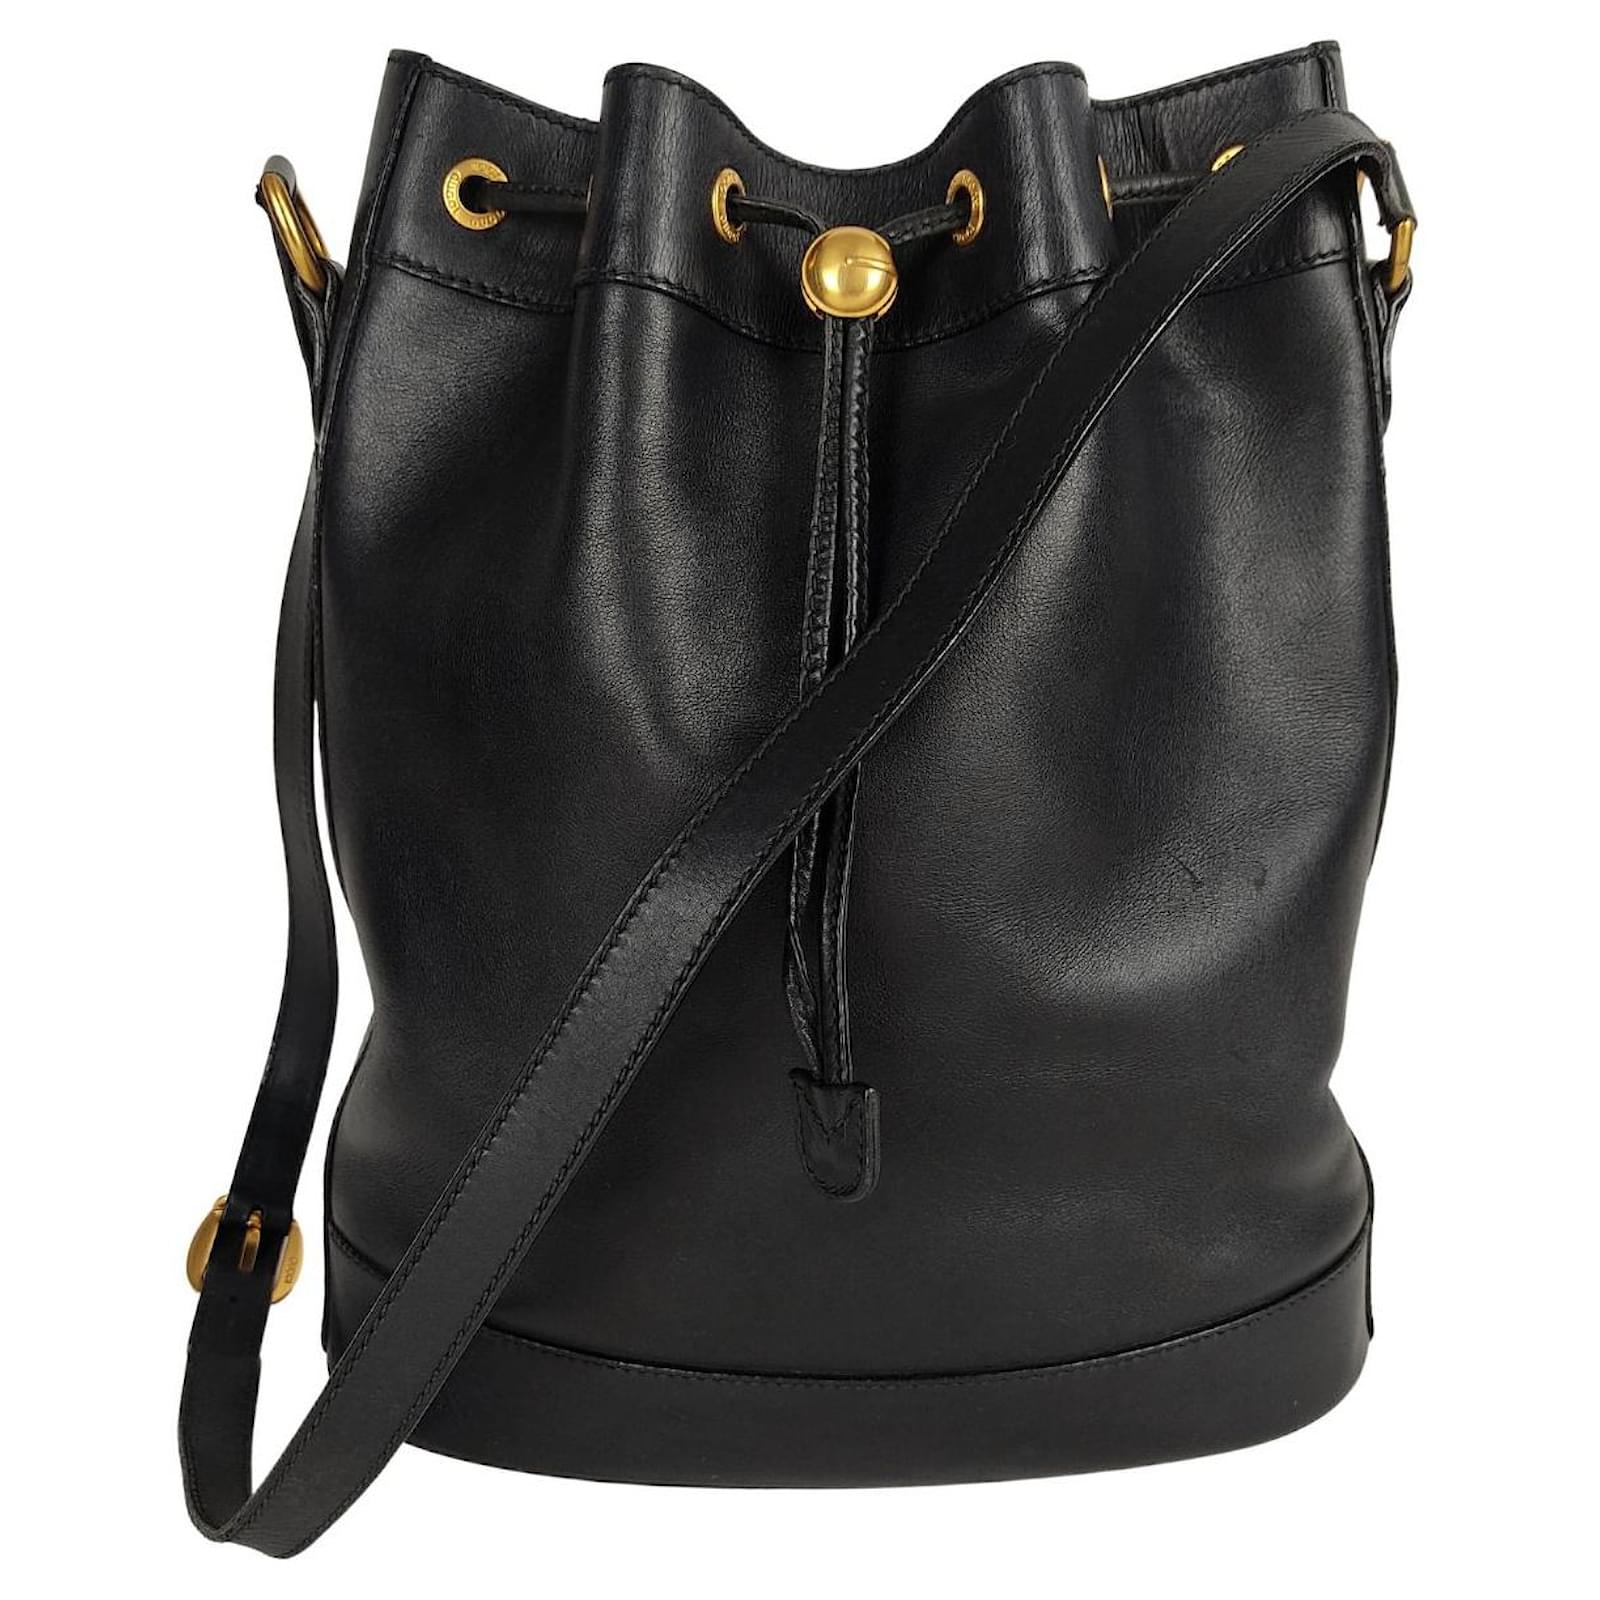 Gucci Vintage Leather Bucket Bag